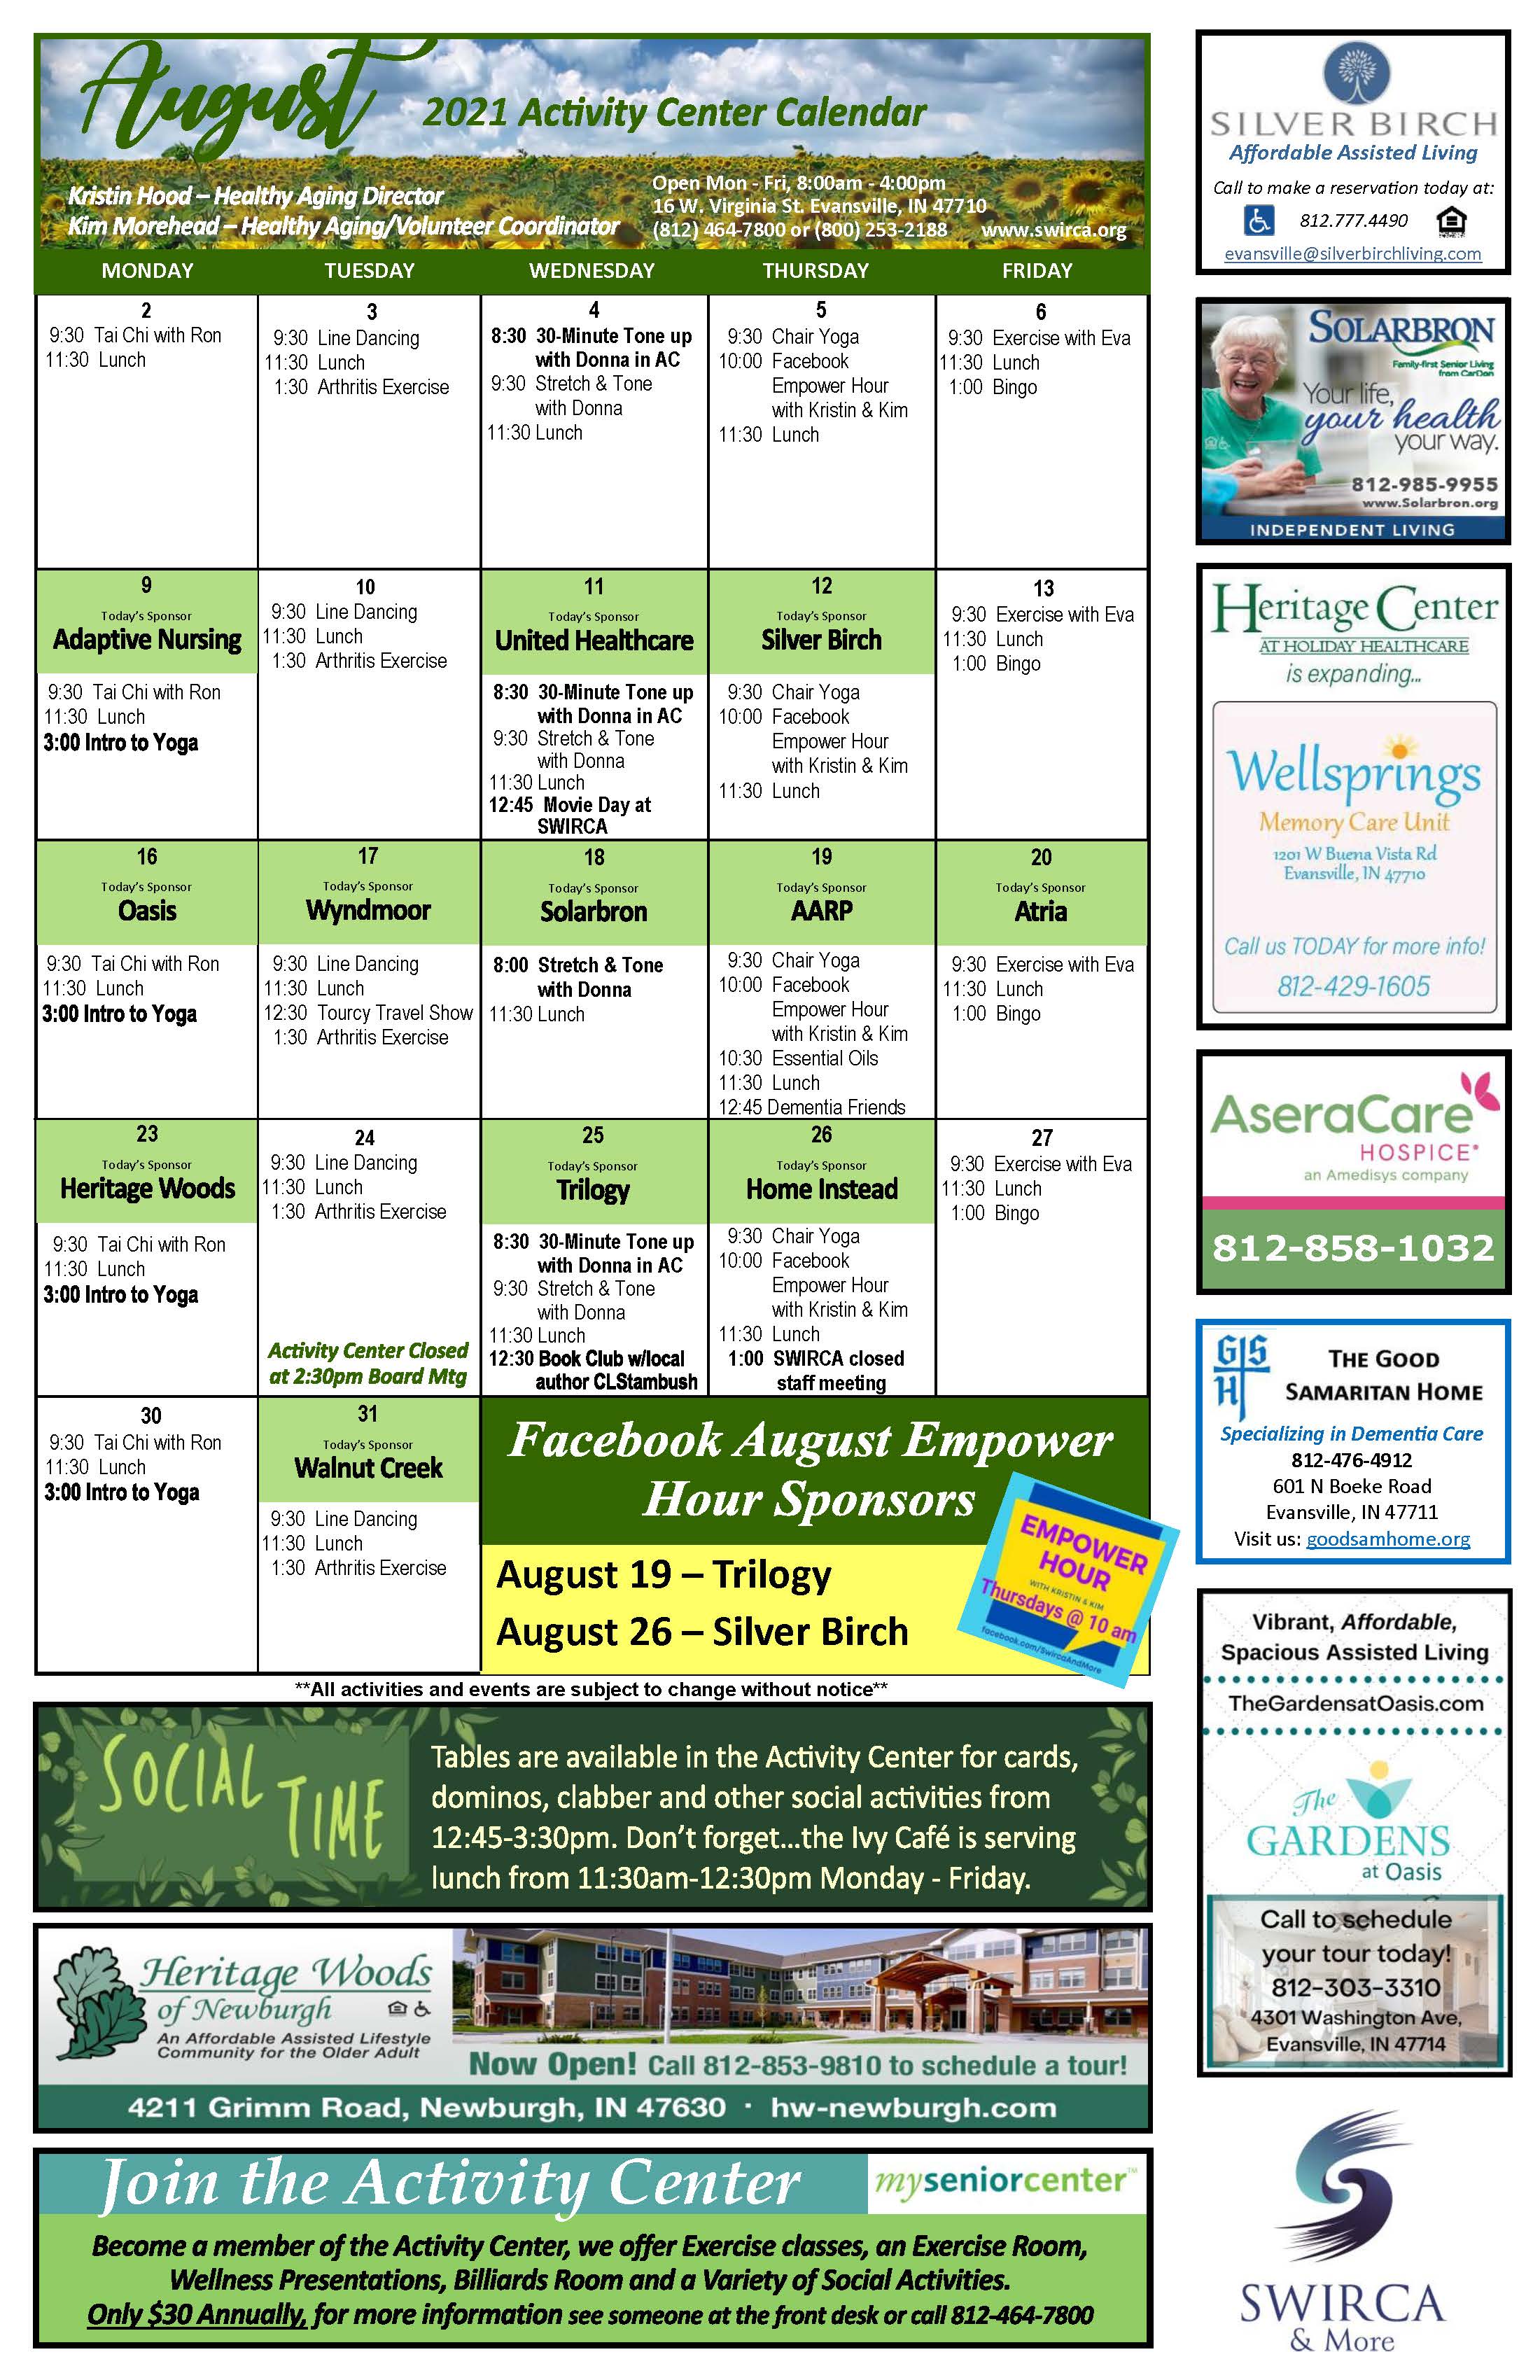 Activity Center Calendar Evansville, IN SWIRCA & More